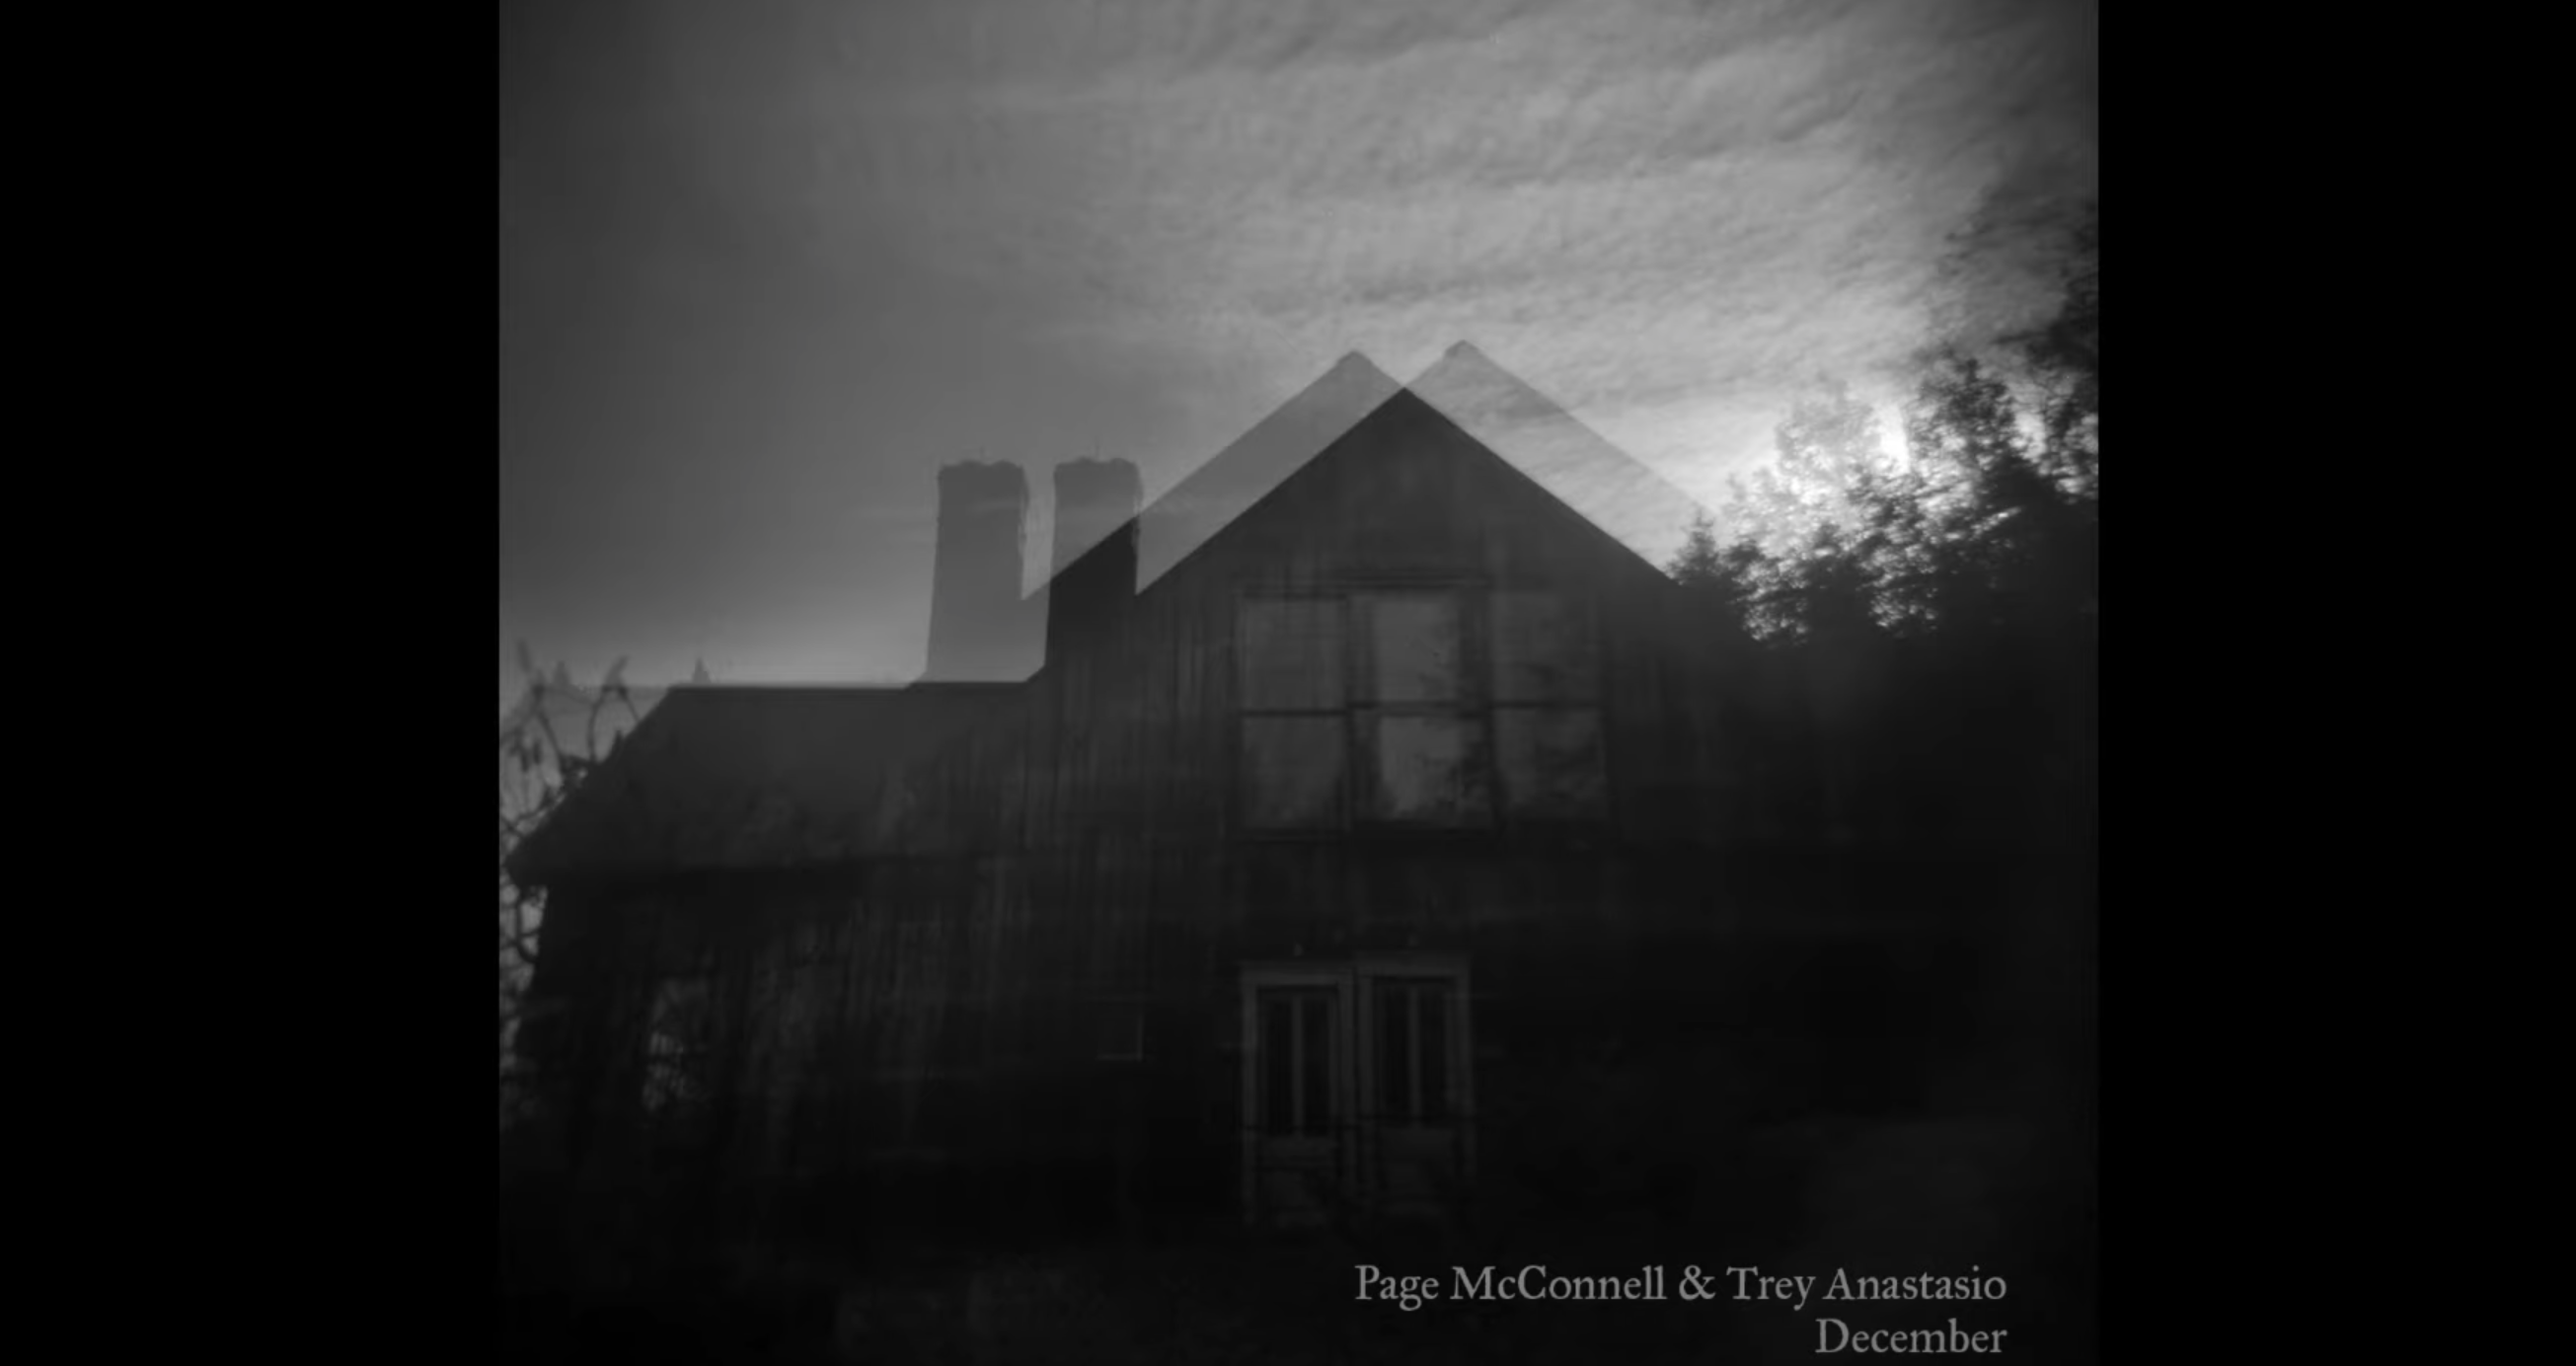 Page McConnell & Trey Anastasio Share New Album ‘December’